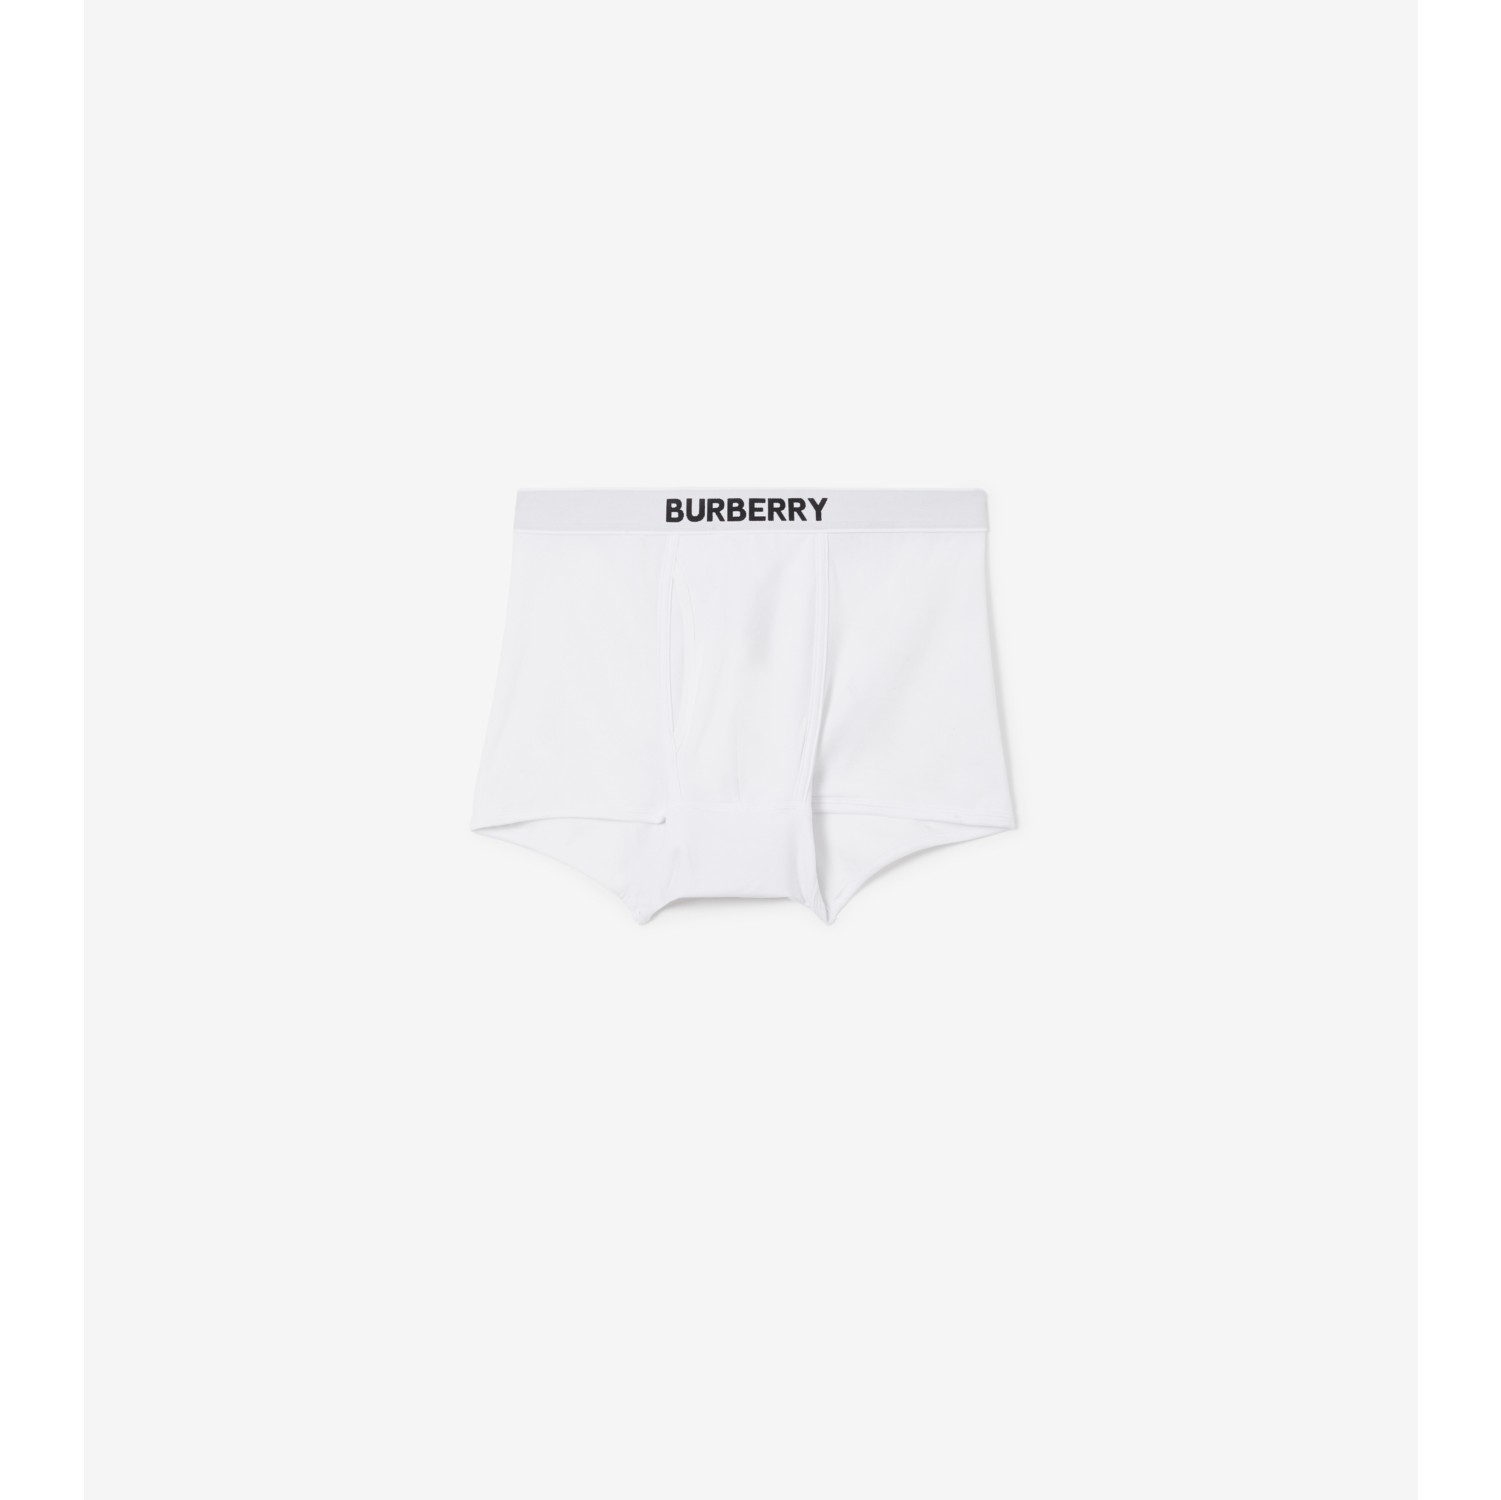 12 x BRITWEAR® Mens Button Fly Jersey Boxer Shorts Natural Cotton Rich Boxers  Underwear